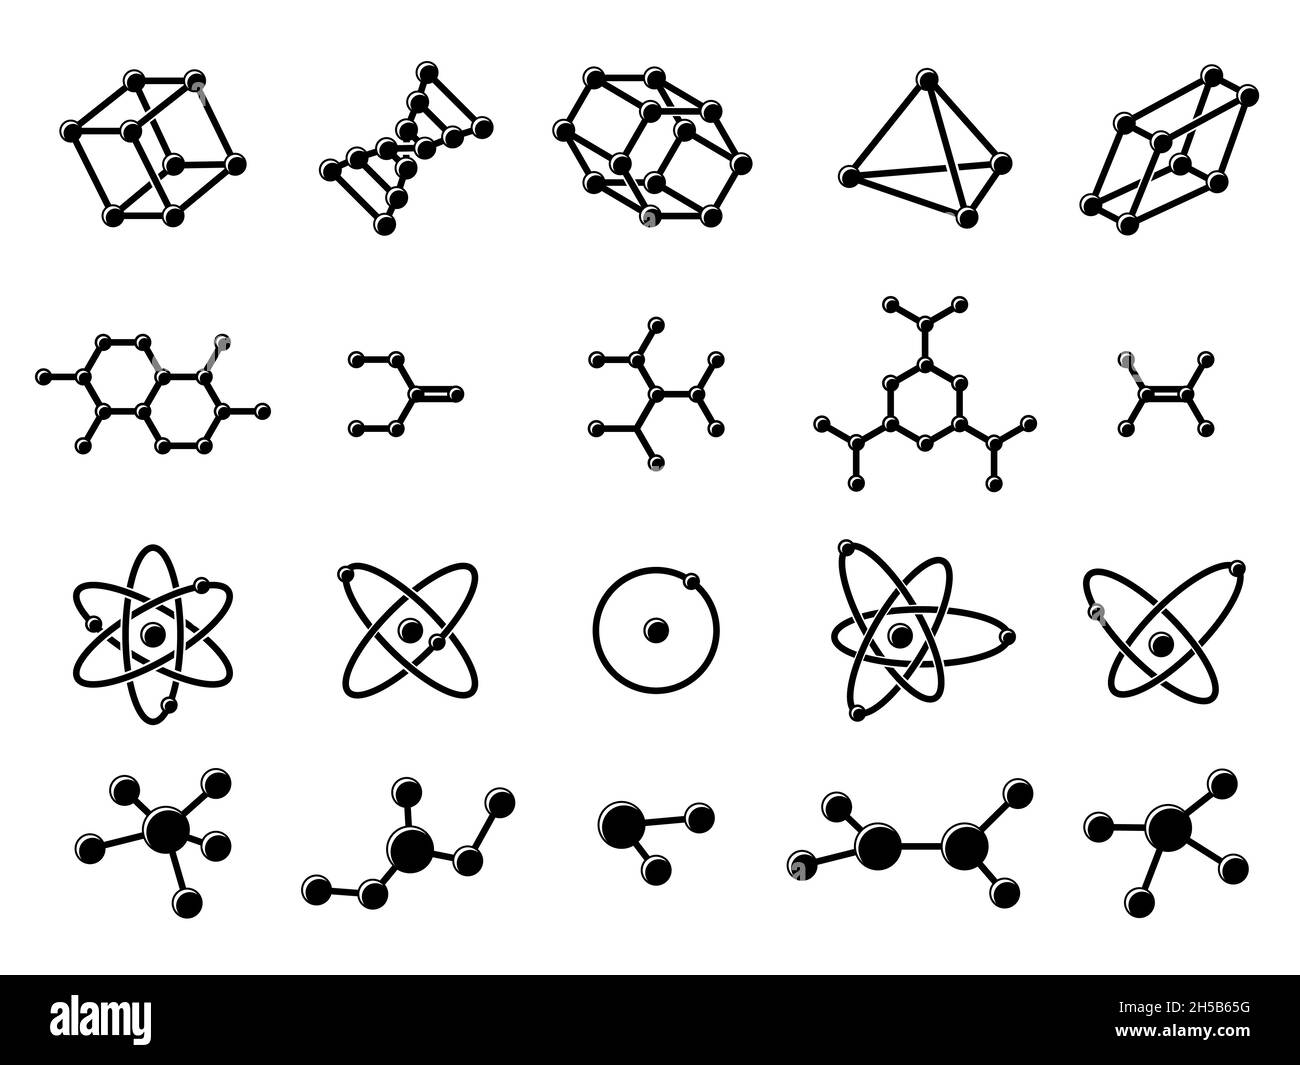 Molekulare Struktur. Hexagon-dna-Molekül, Logo verbundene Moleküle. Chemische Formel, schwarze Chemie oder Medizin Forschung neuesten Vektor-Symbole Stock Vektor